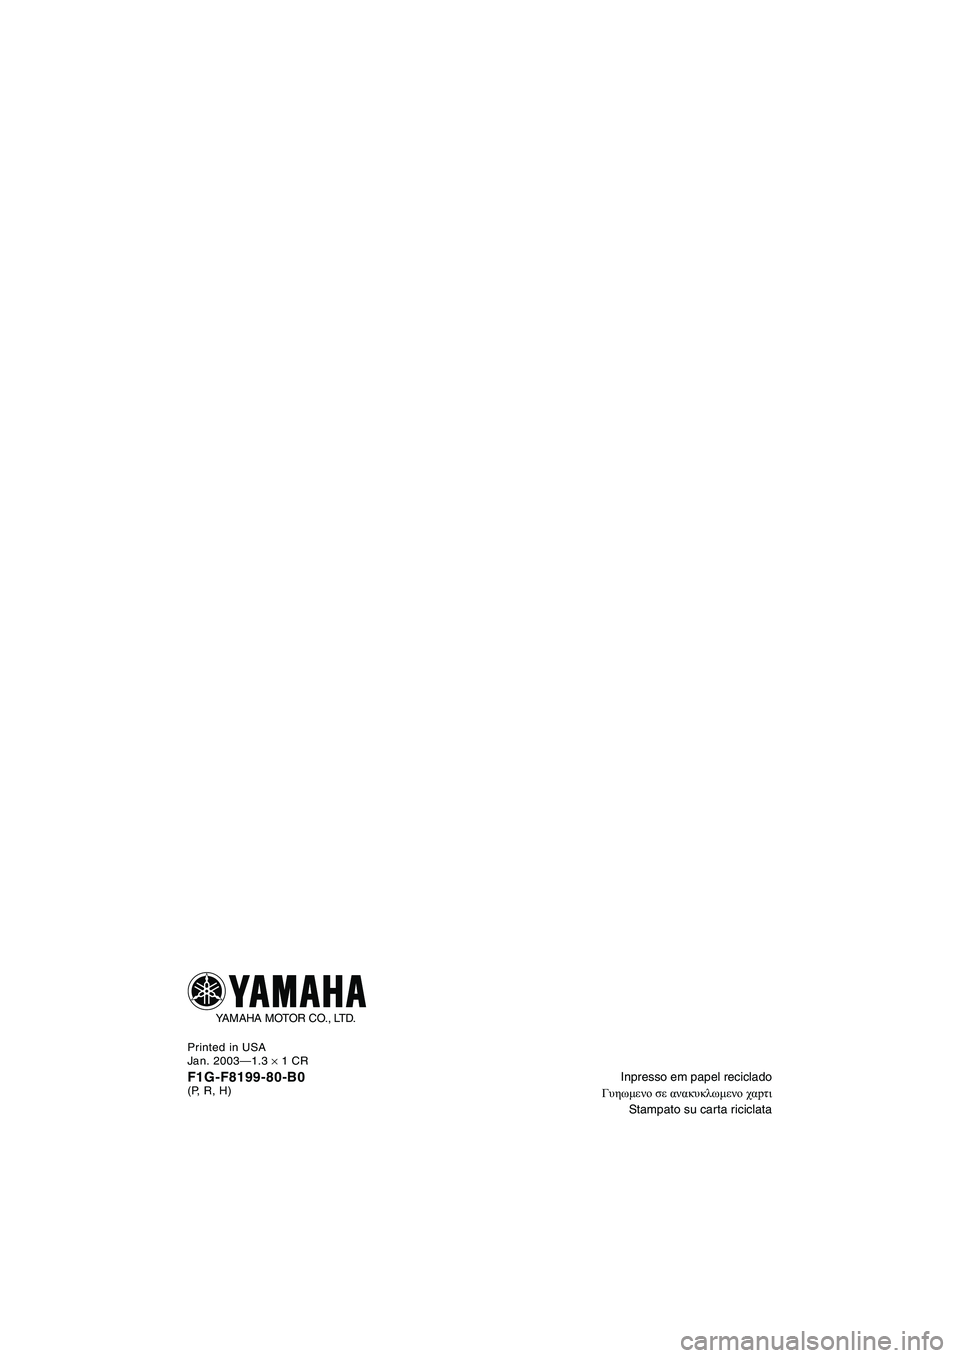 YAMAHA GP1300R 2003  Manuale duso (in Italian) Inpresso em papel reciclado
Γυηωμενο σε ανακυκλωμενο χαpτι
Stampato su carta riciclata
Printed in USA
Jan. 2003—1.3 
× 1 CR
F1G-F8199-80-B0(P, R, H)
YAMAHA MOTOR CO., LTD.